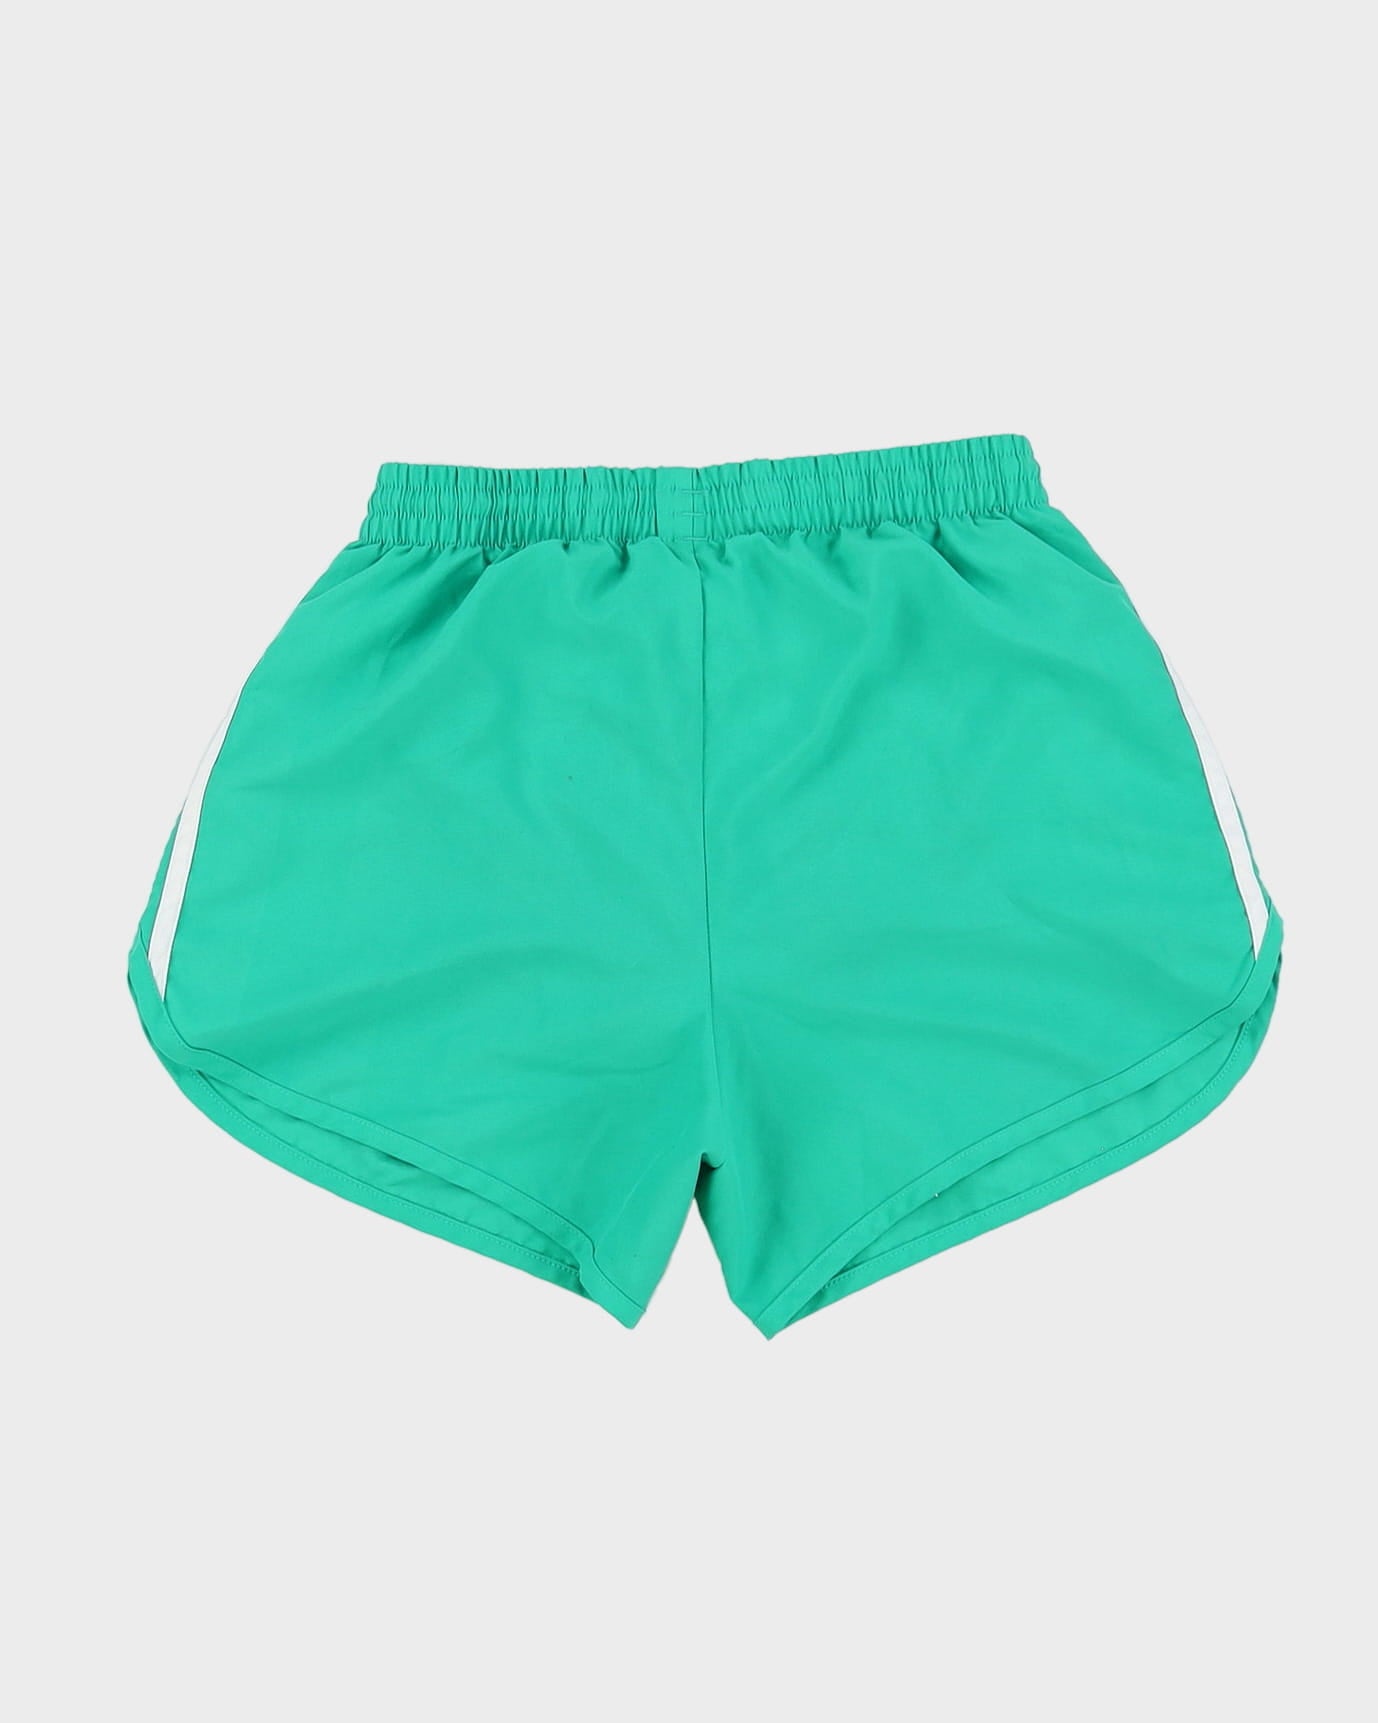 Adidas Green / White Detailed Swimming Shorts - S